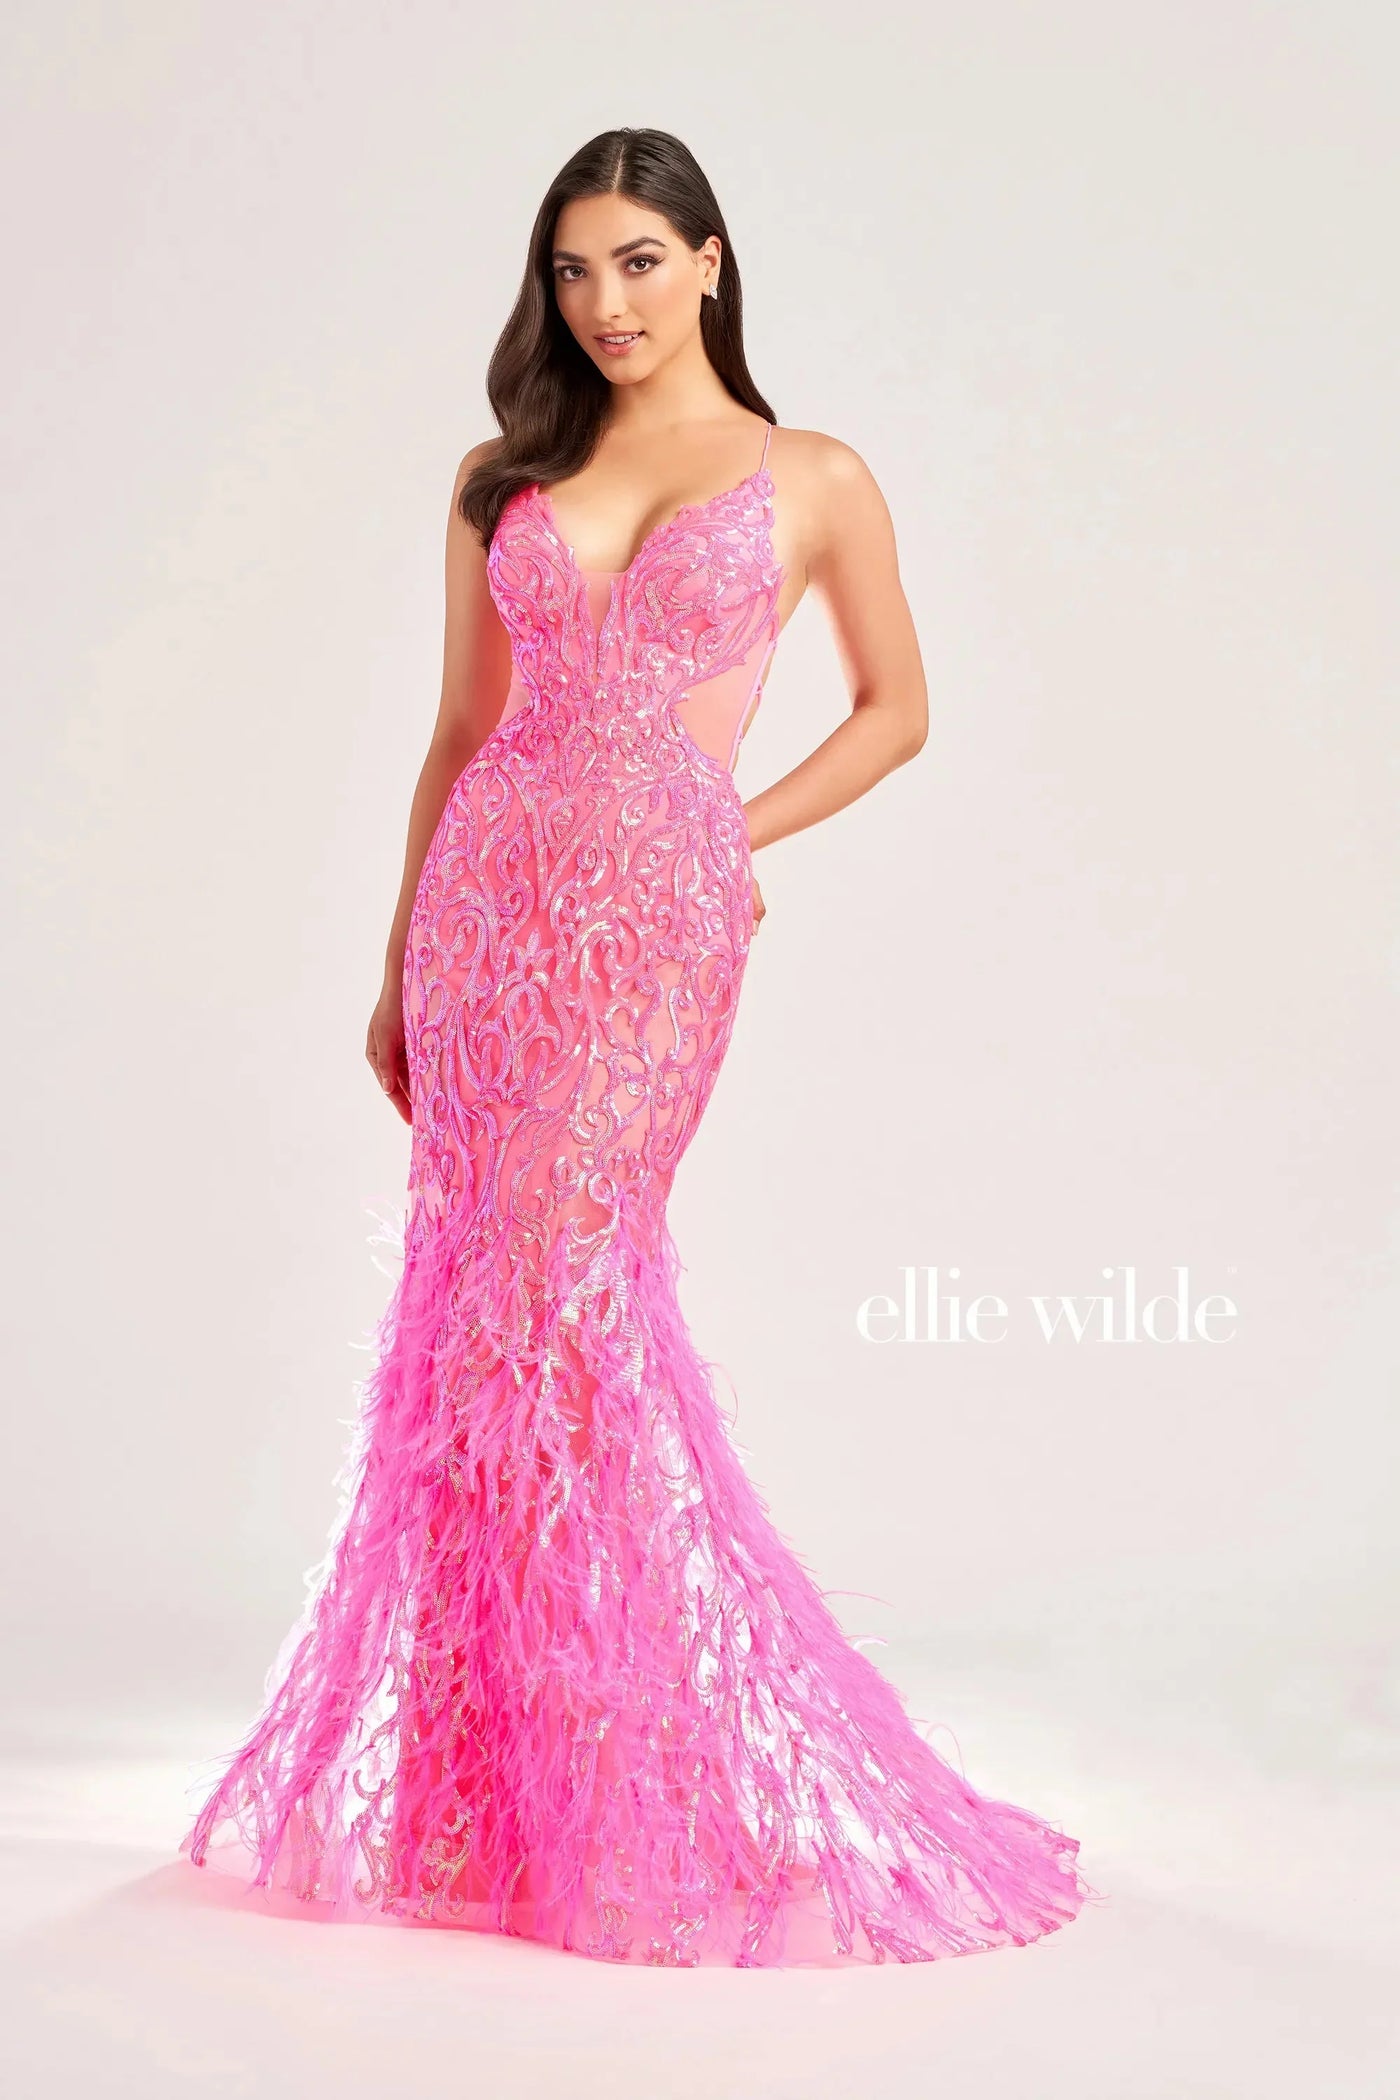 Ellie Wilde EW35006 - Open Back Feather Evening Dress